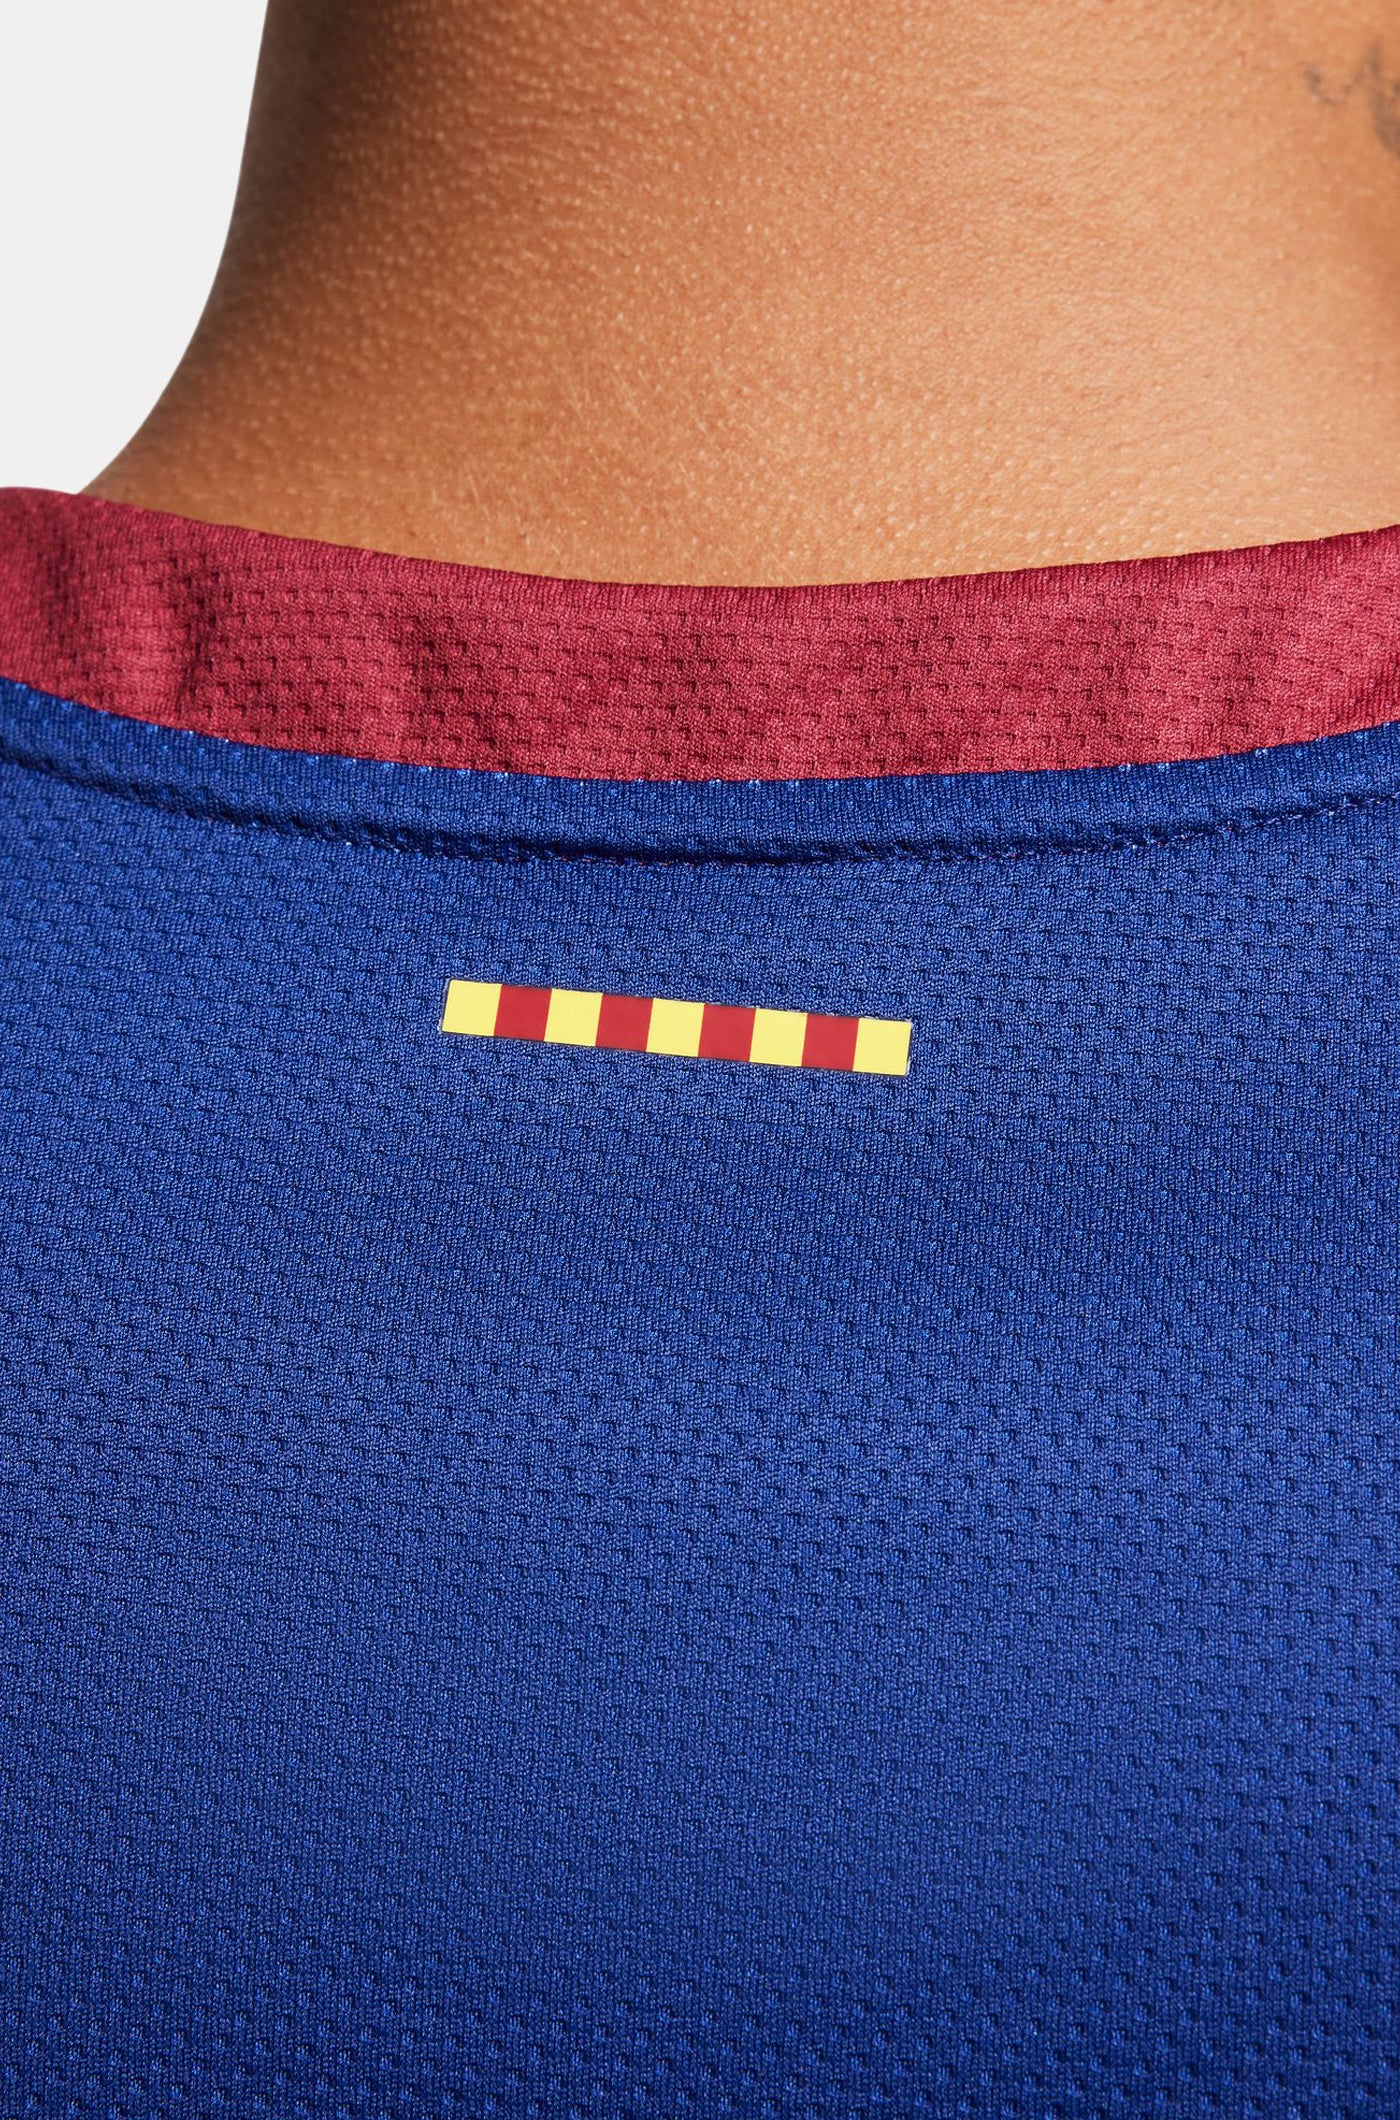 Euroleague FC Barcelona home basketball shirt 23/24